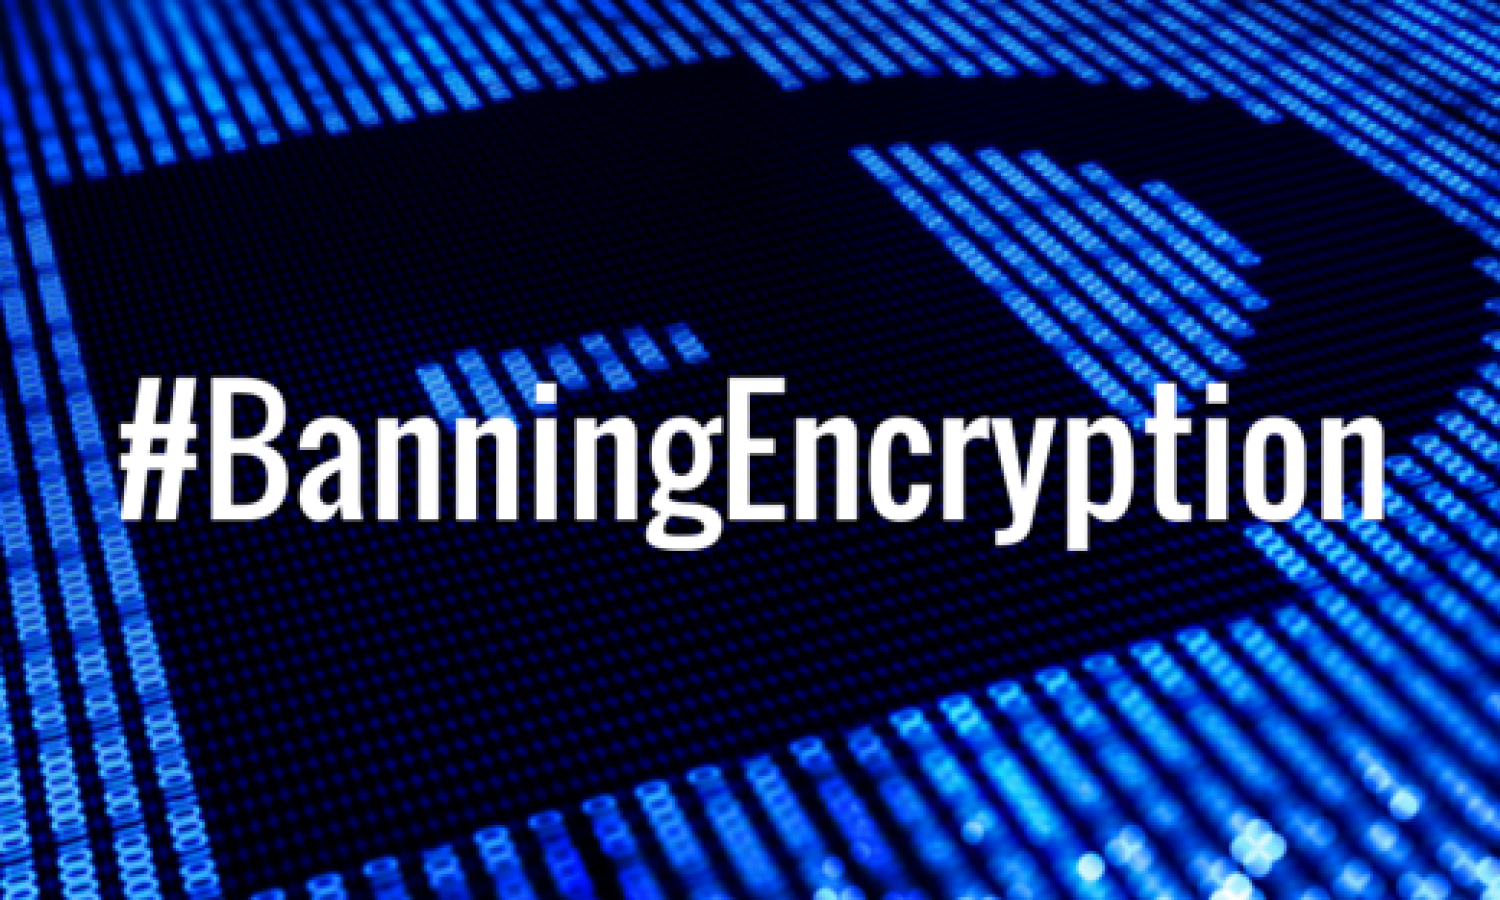 banning encryption